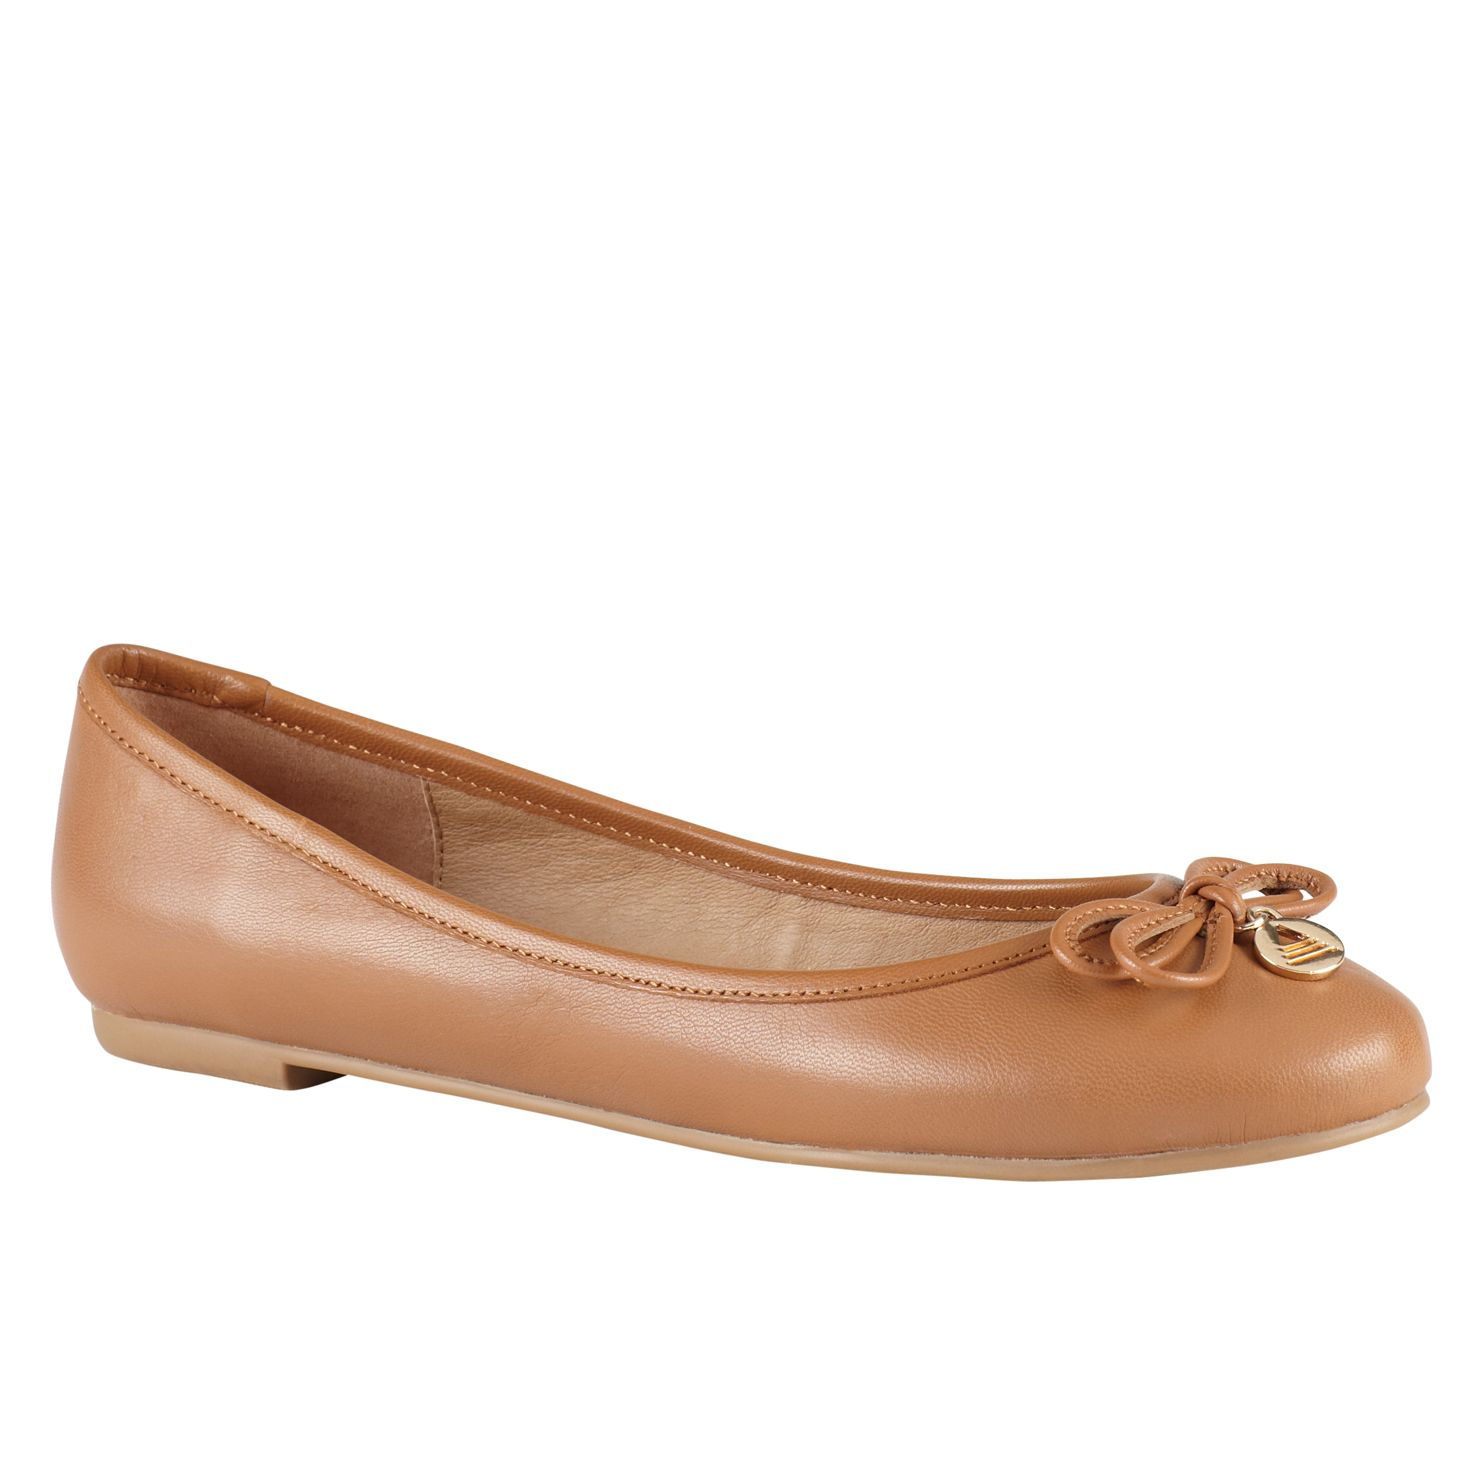 Aldo Qeirwen Ballerina Pump Shoes in Brown (Cognac) | Lyst